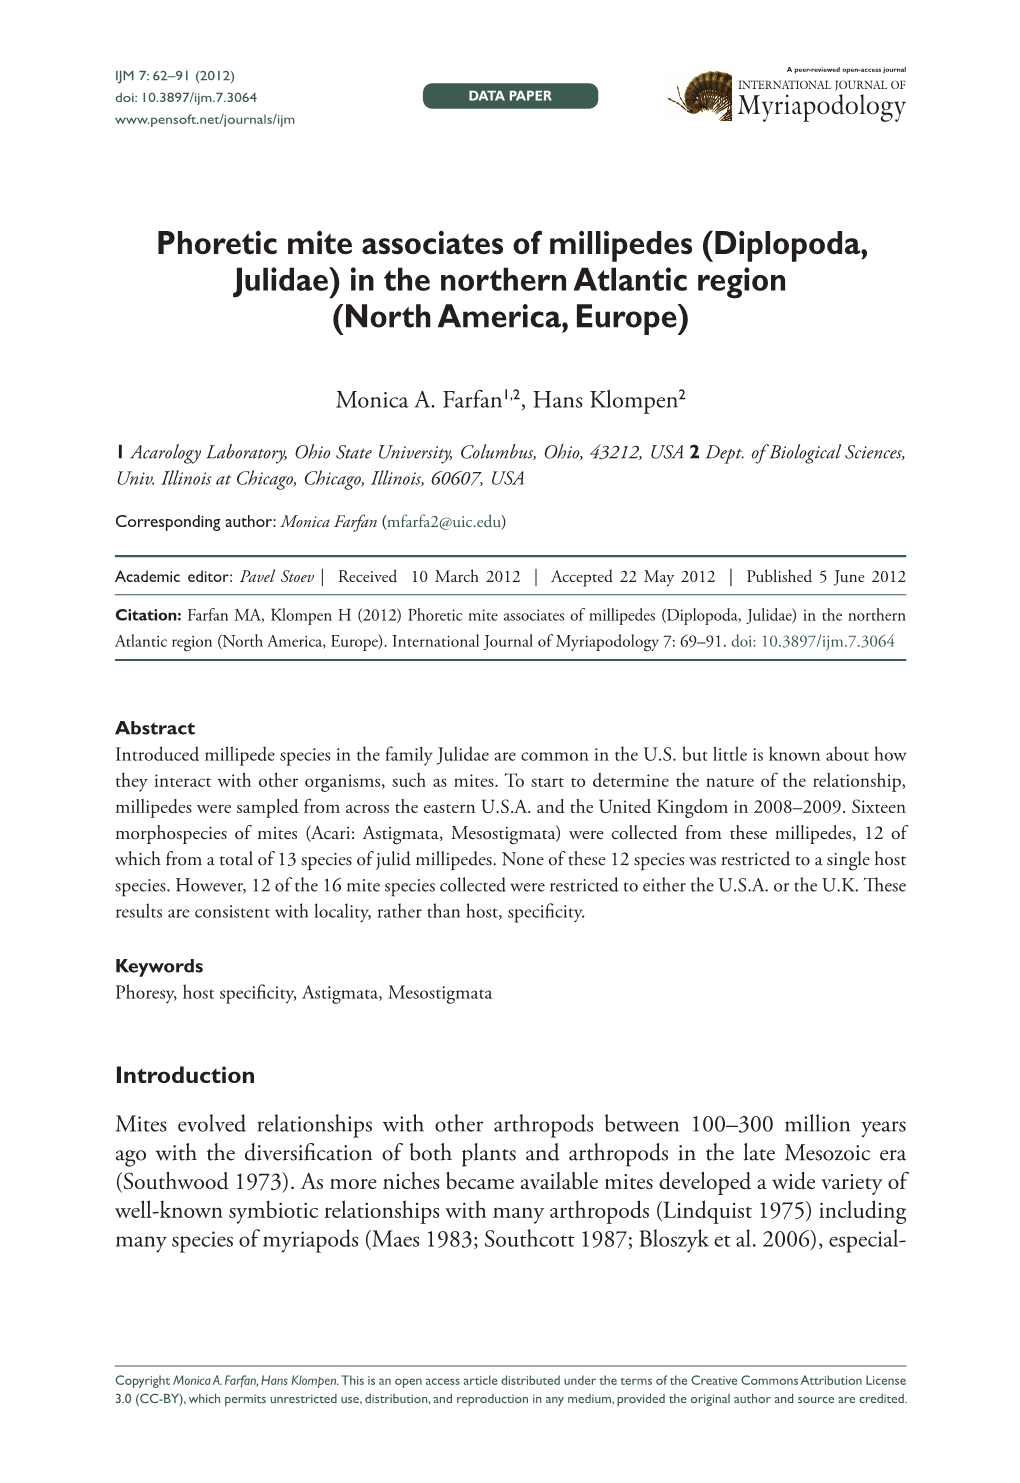 Diplopoda, Julidae) in the Northern Atlanticinternat Region...Ional Journal69 of Doi: 10.3897/Ijm.7.3064 Data Paper Myriapodology